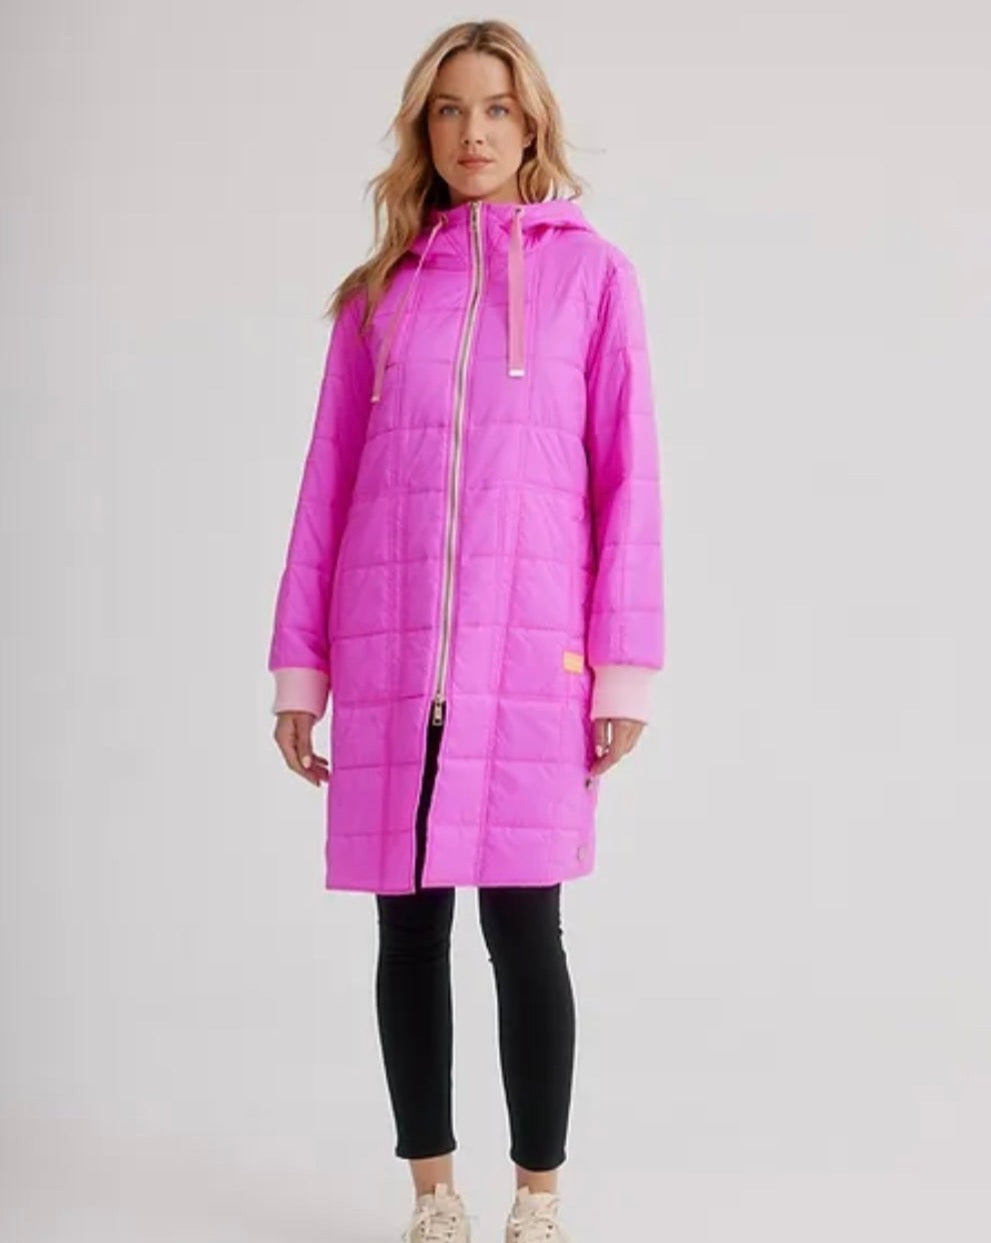 Passion Pink Raincoat